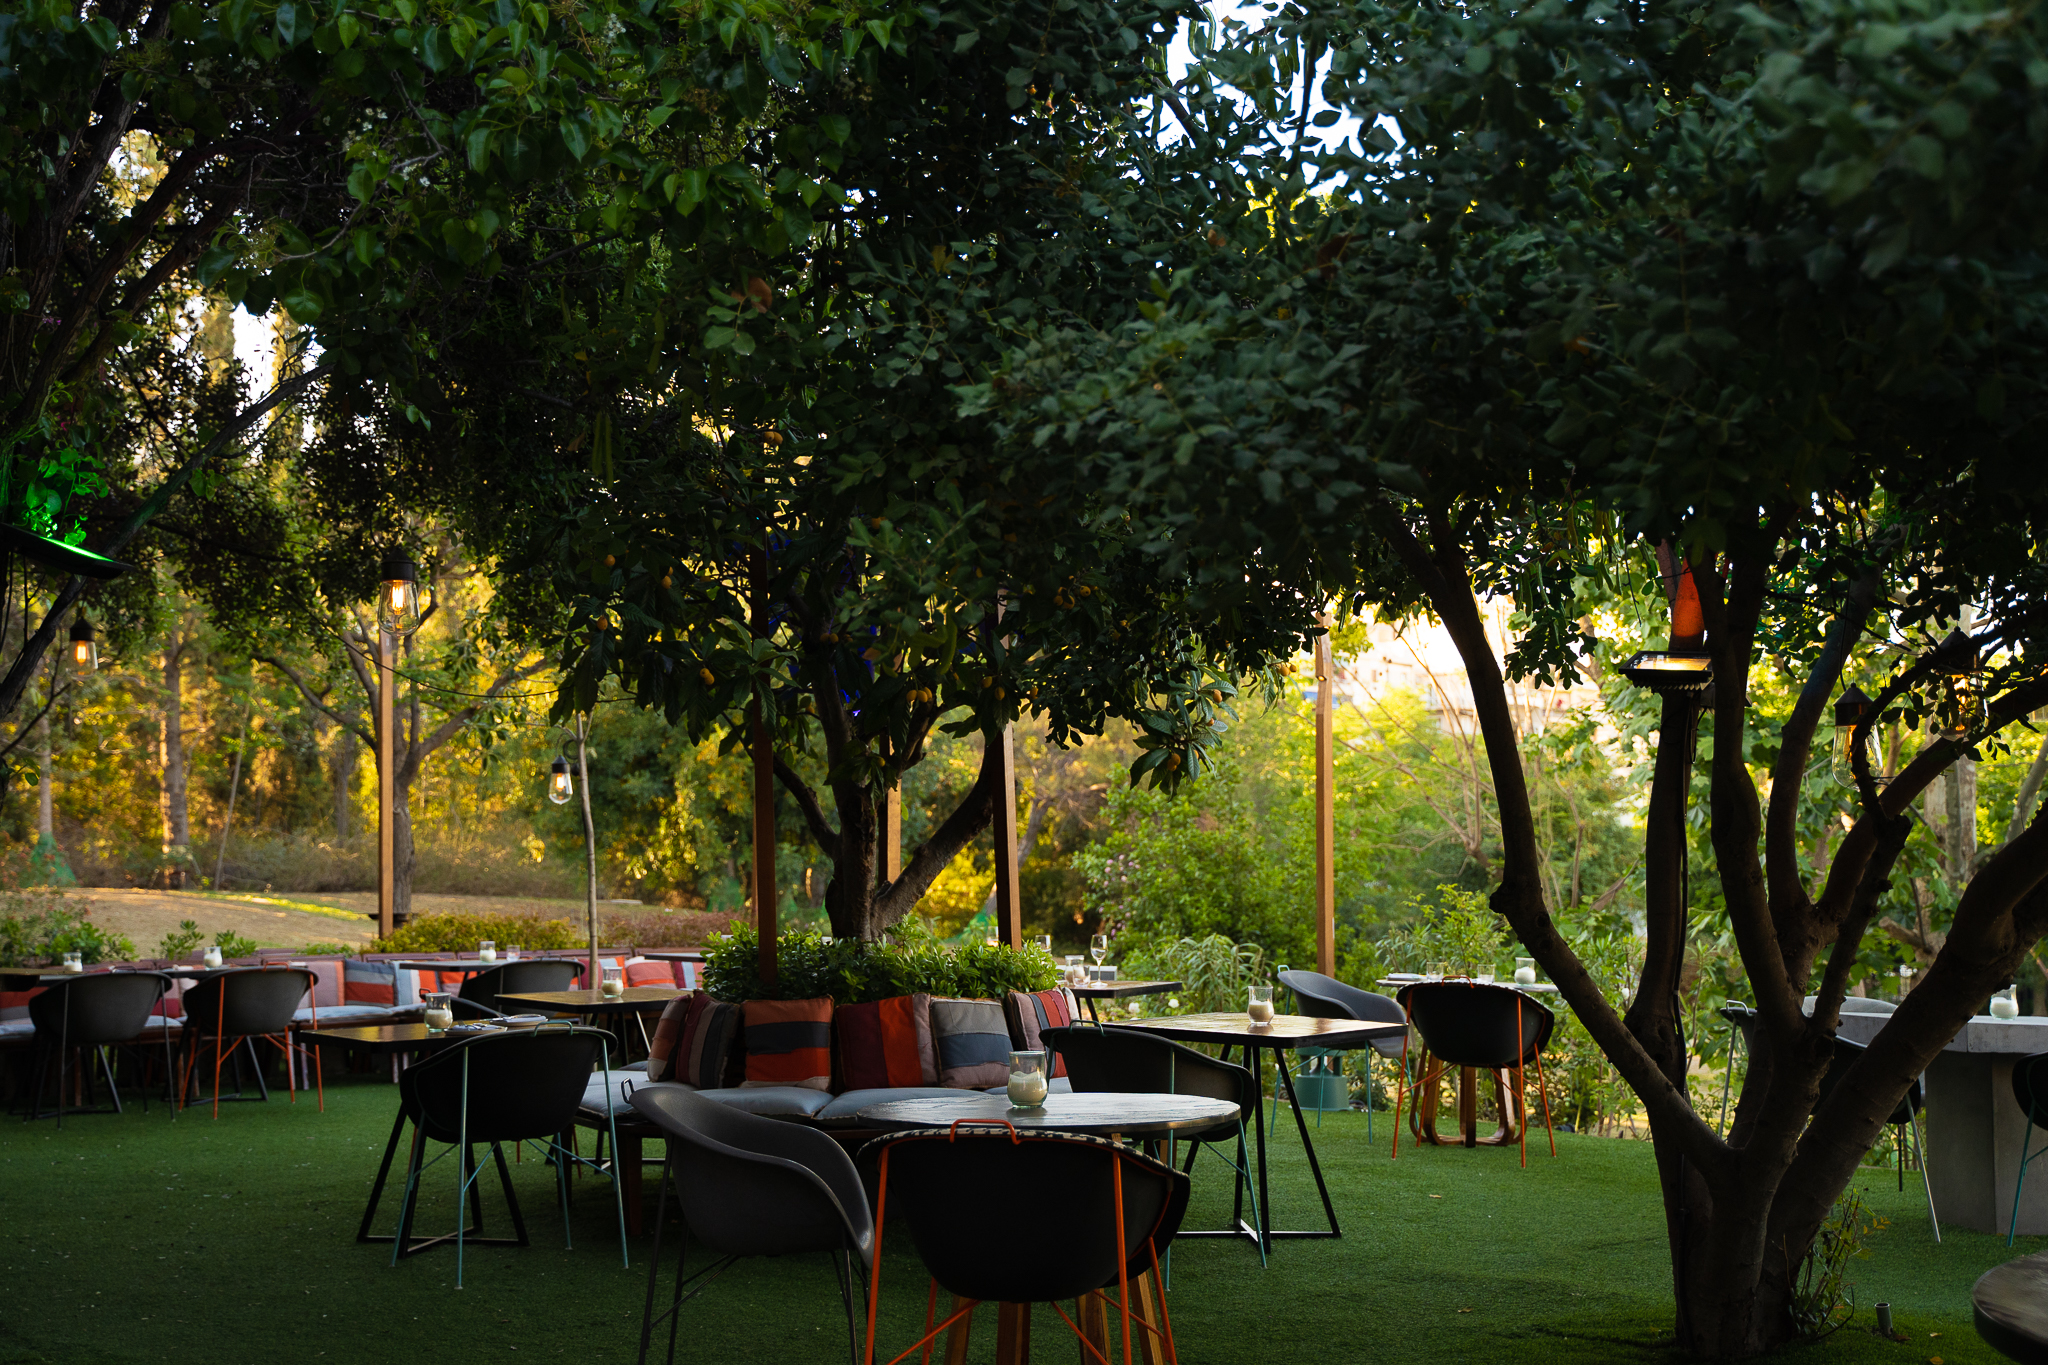 Take me out: Οι πιο ωραίοι κήποι της Αθήνας για φαγητό & ποτό